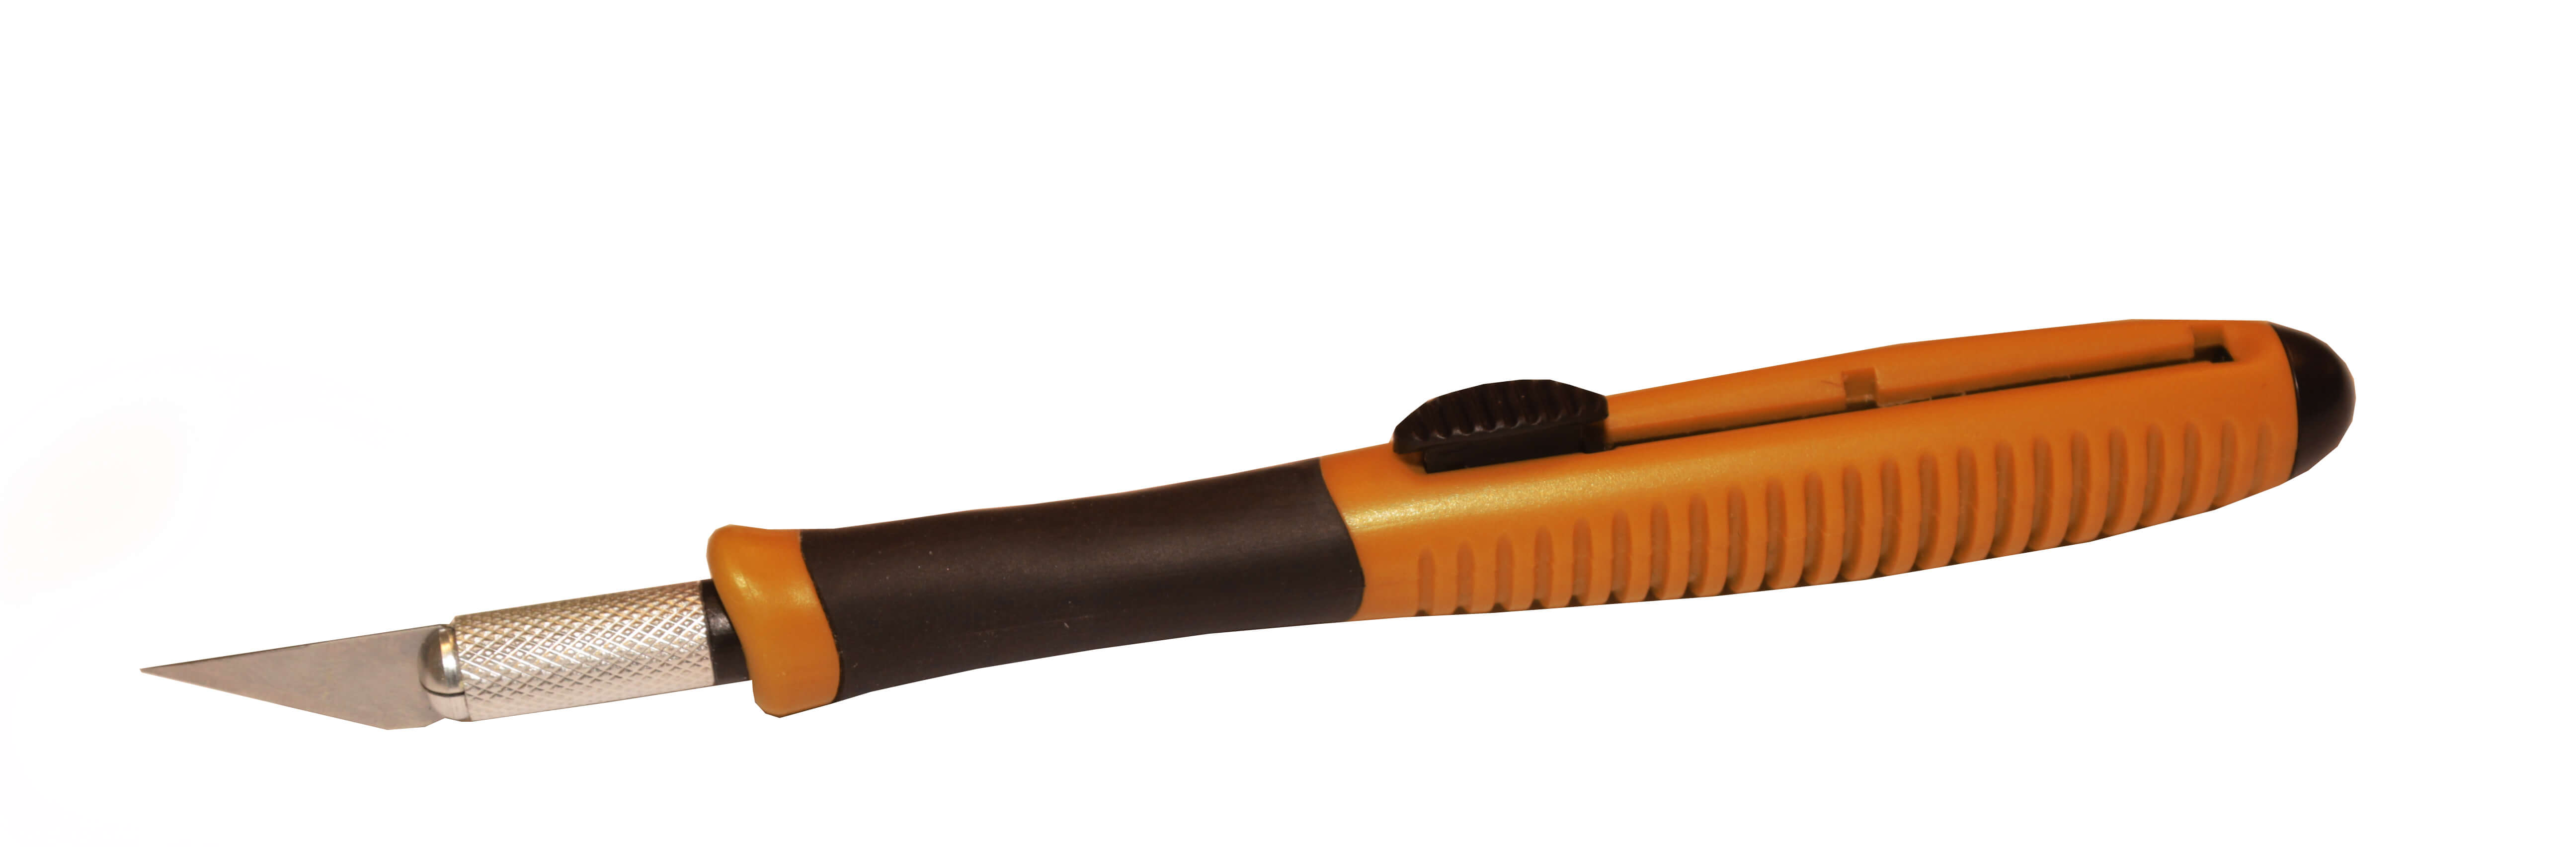 Yellotools Flipper KnifePen  Cuttermesser mit zwei Funktionen online  bestellen